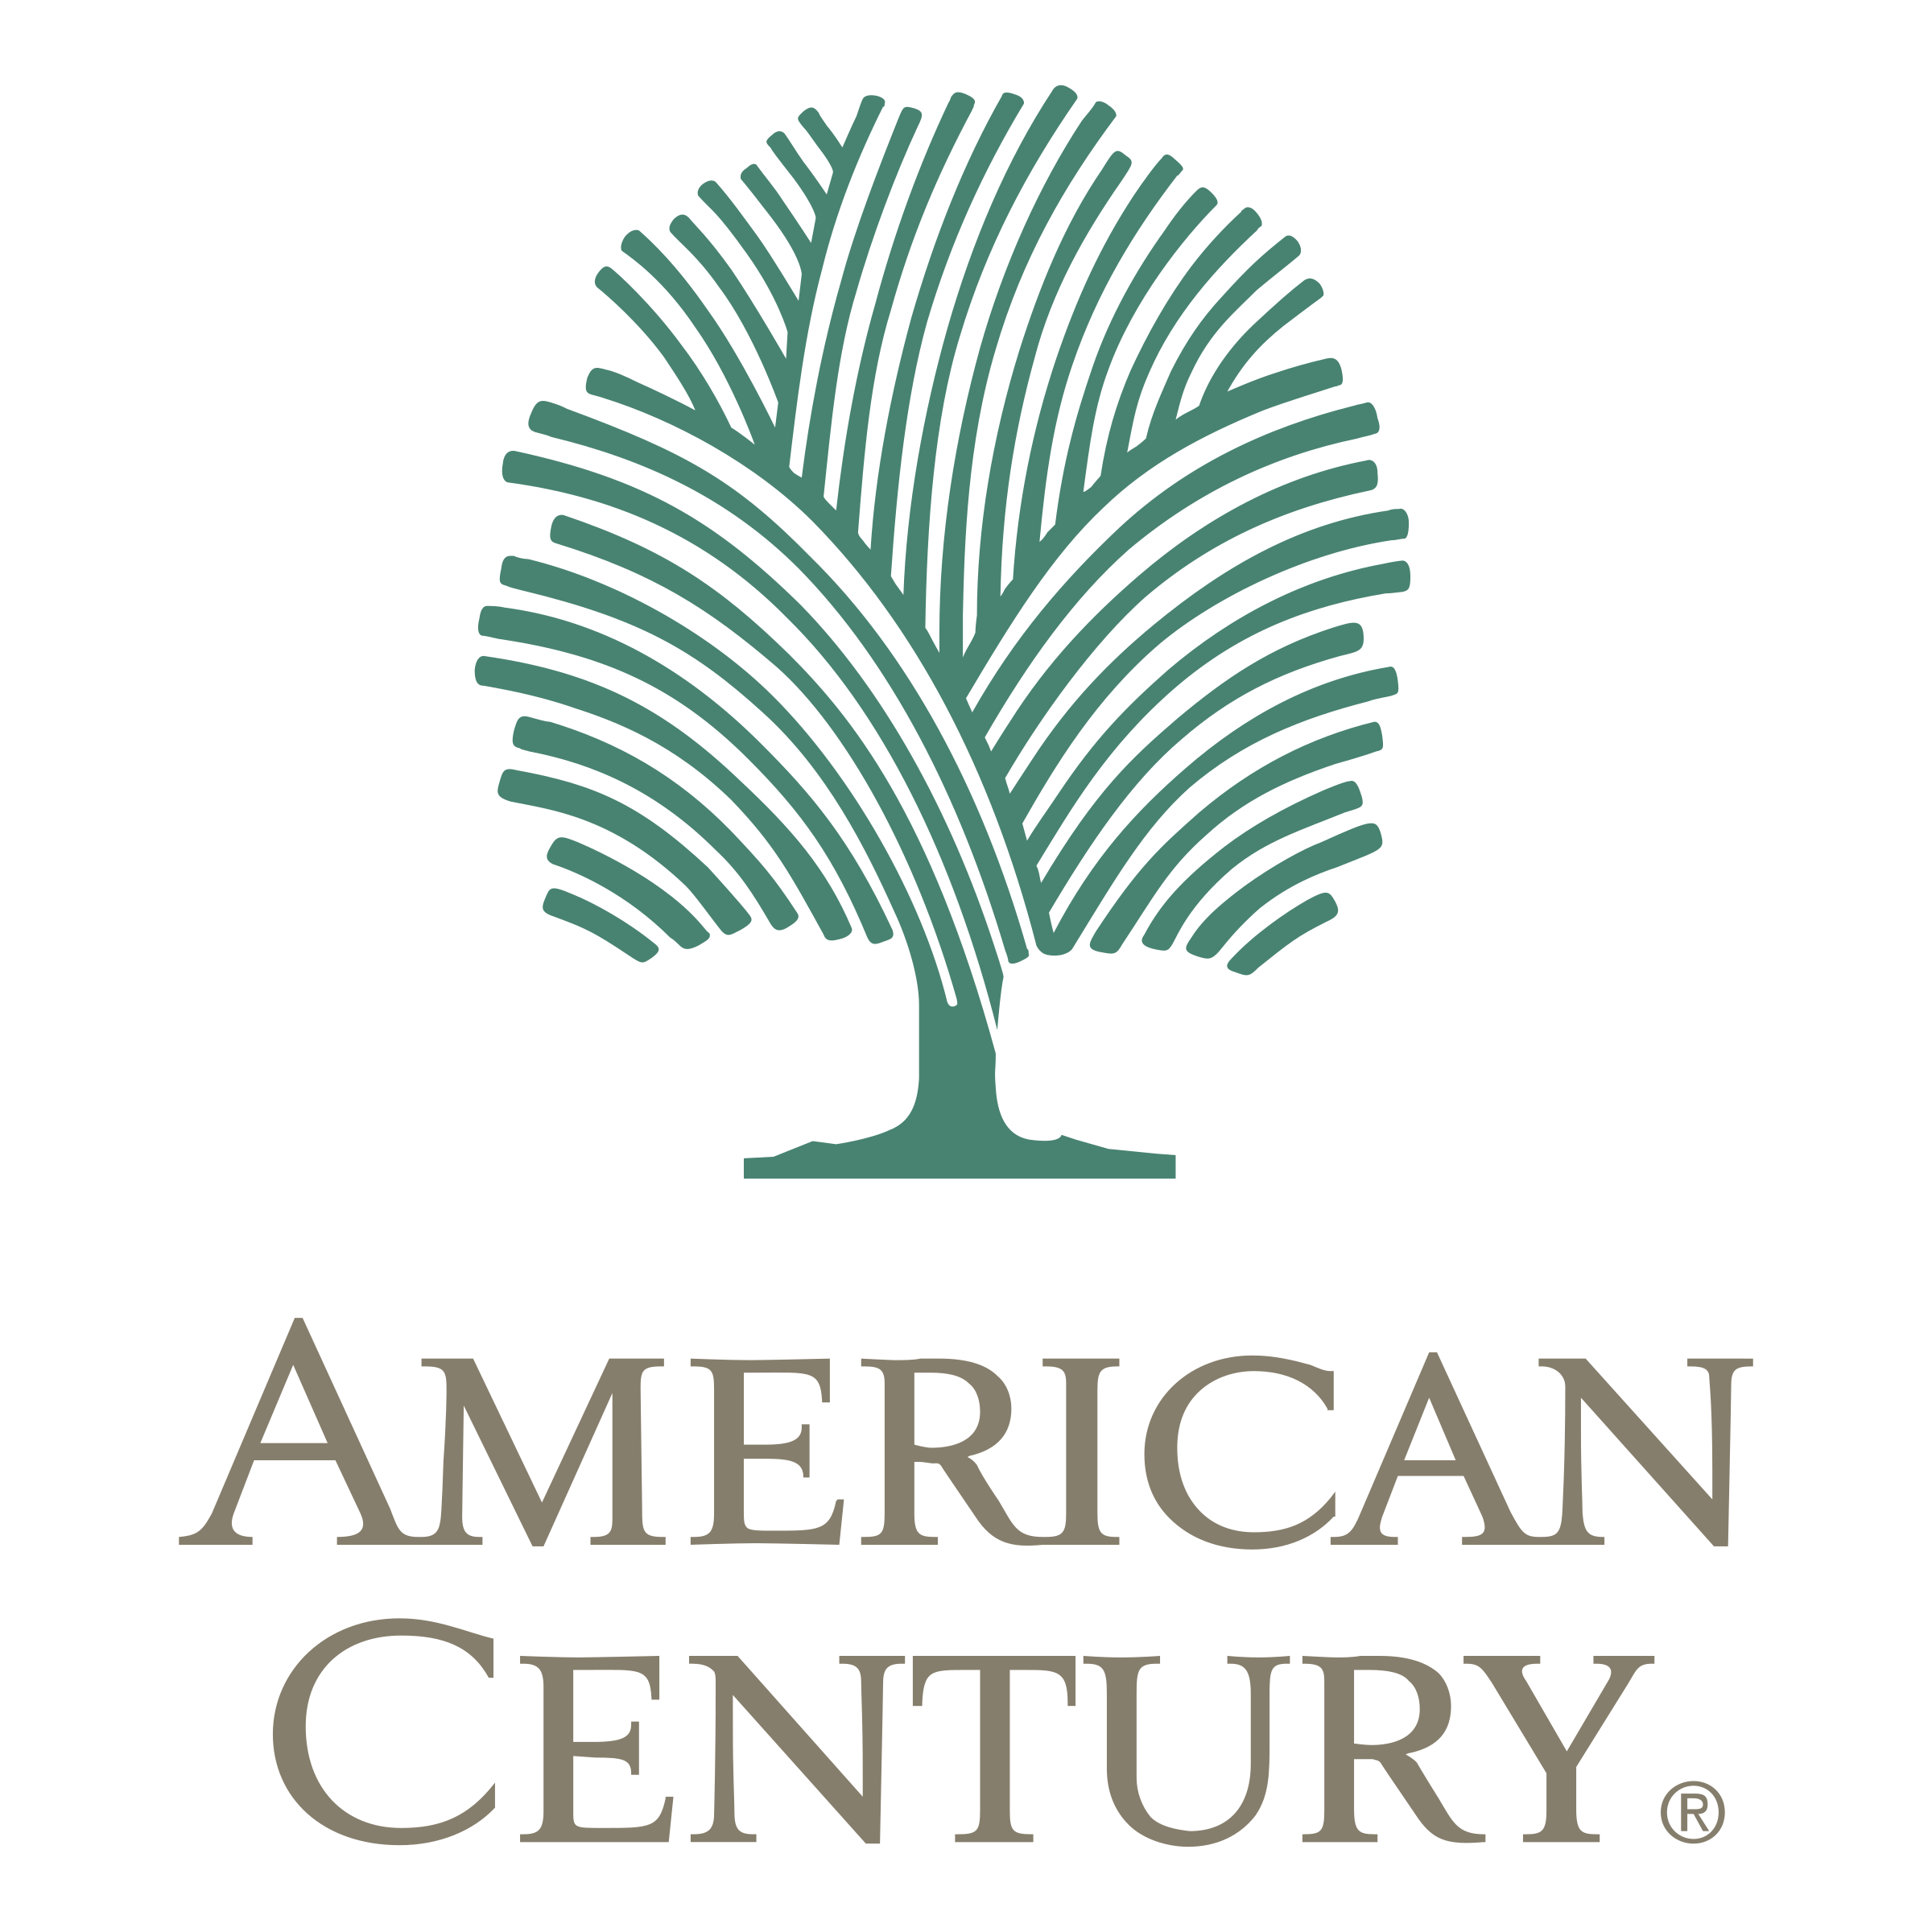 Century Logo - American Century Logo PNG Transparent & SVG Vector - Freebie Supply